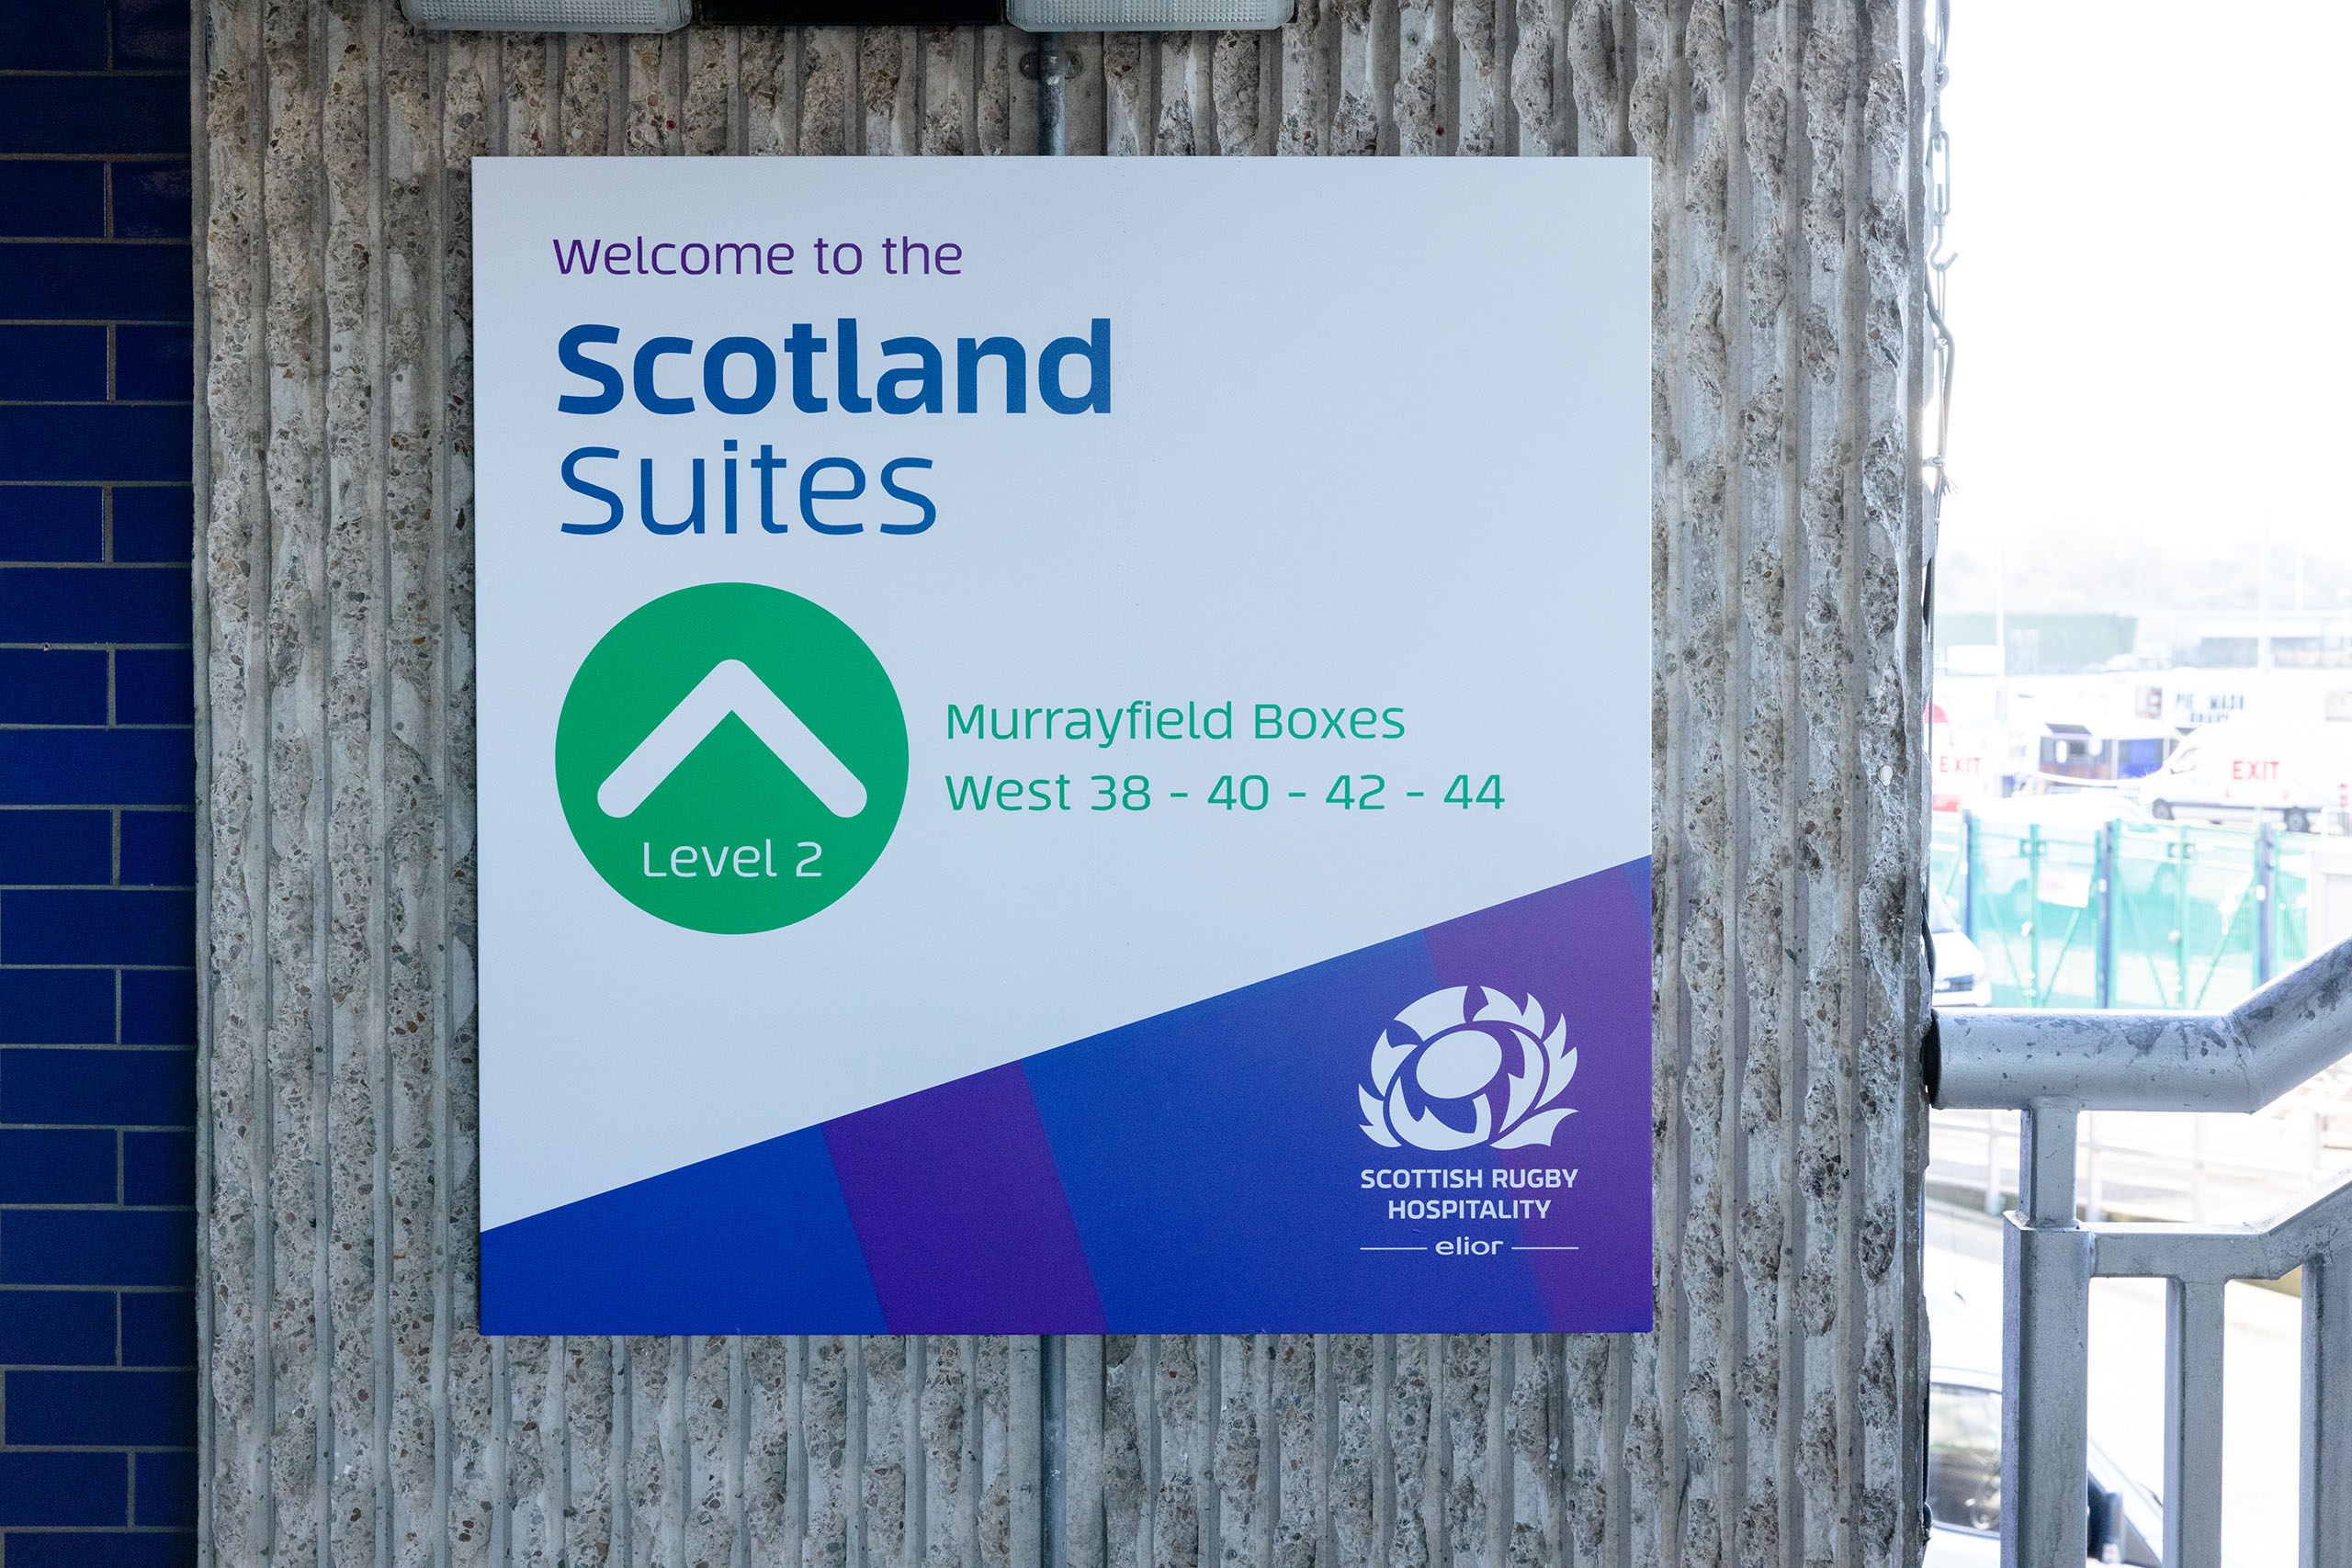 Scotland Suites Welcome